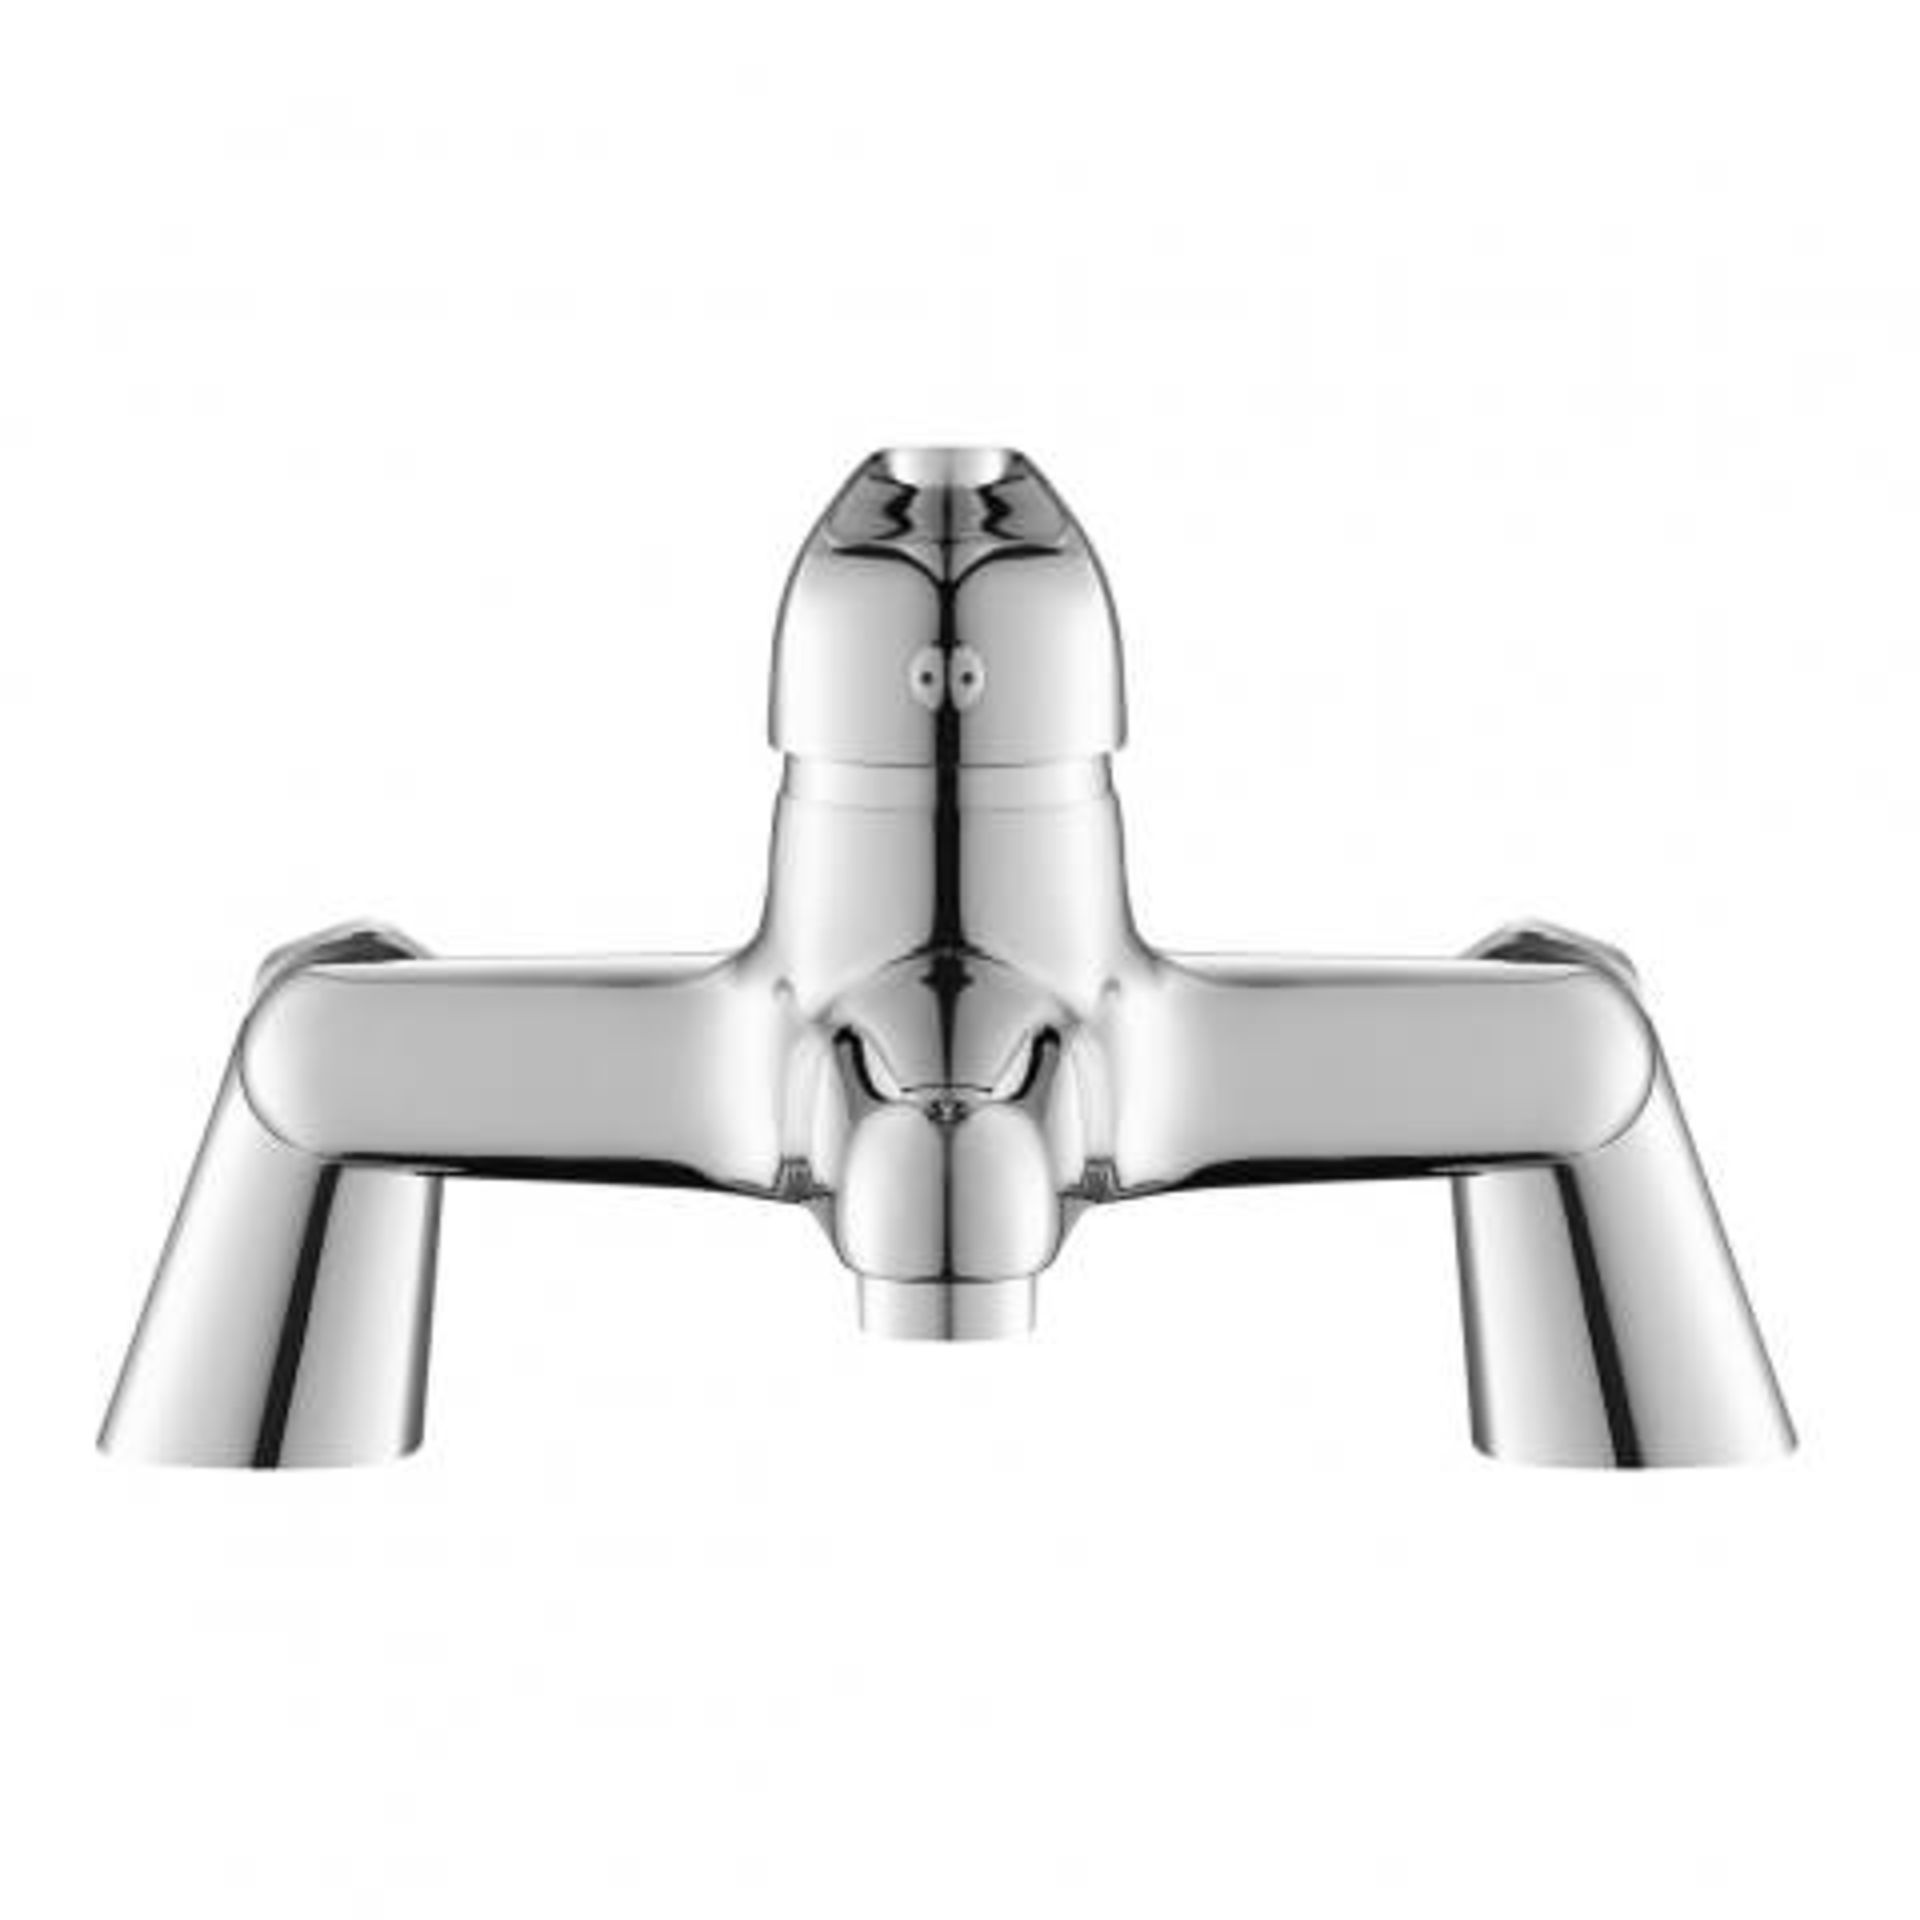 (I62) Sleek Modern Bathroom Chrome Bath Filler Lever Mixer Tap Presenting a contemporary design, - Image 3 of 4